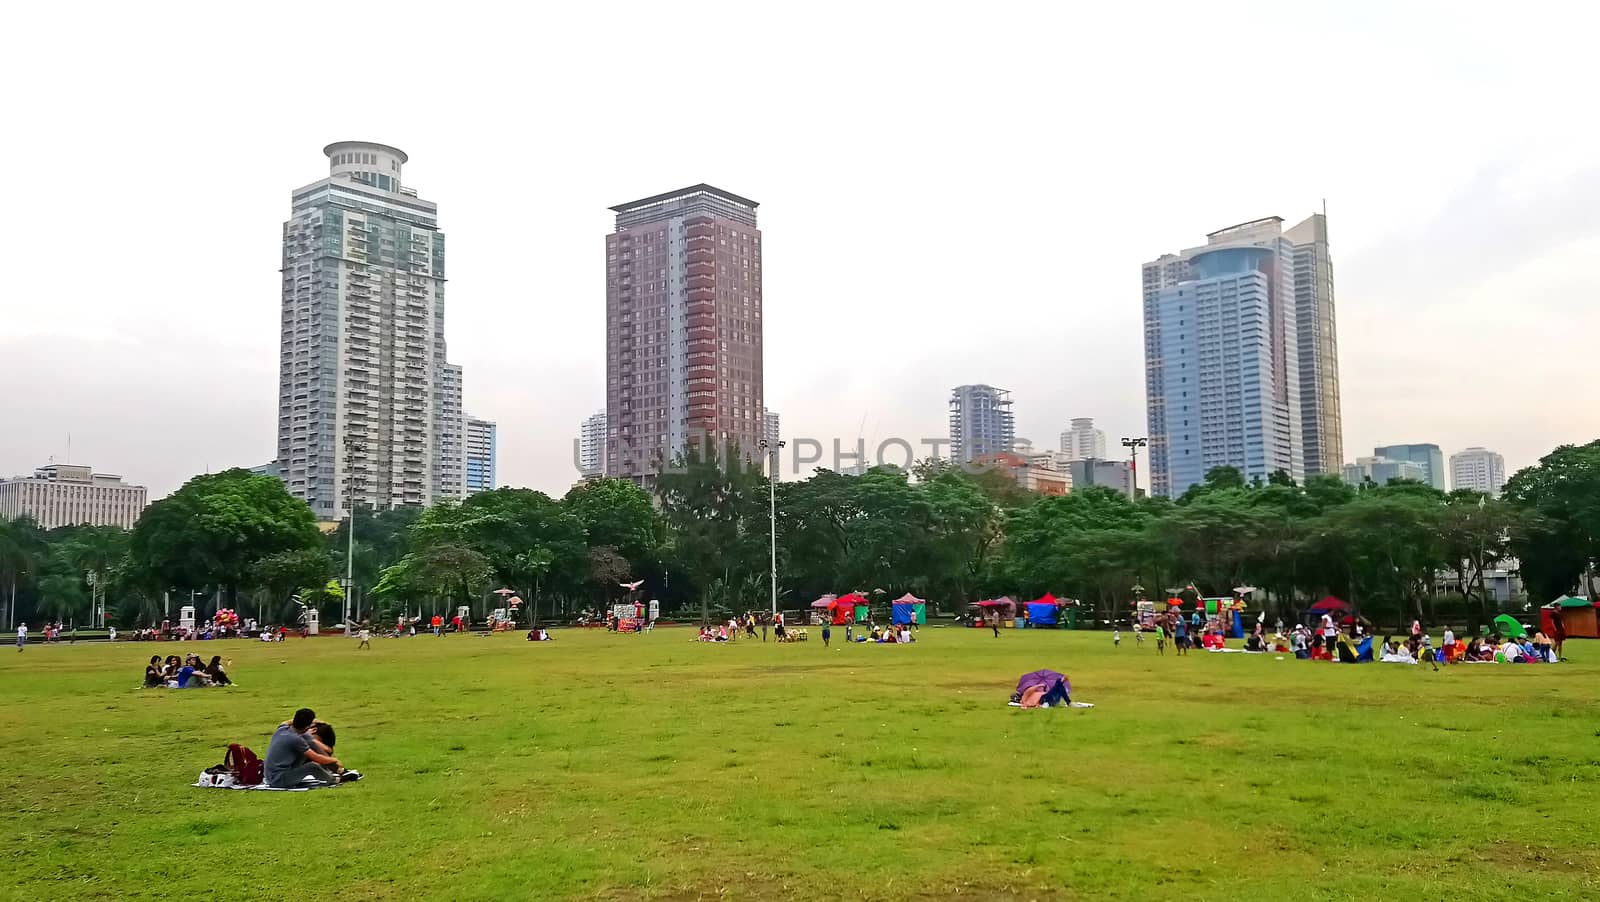 San Lorenzo Ruiz plaza field in Manila, Philippines by imwaltersy